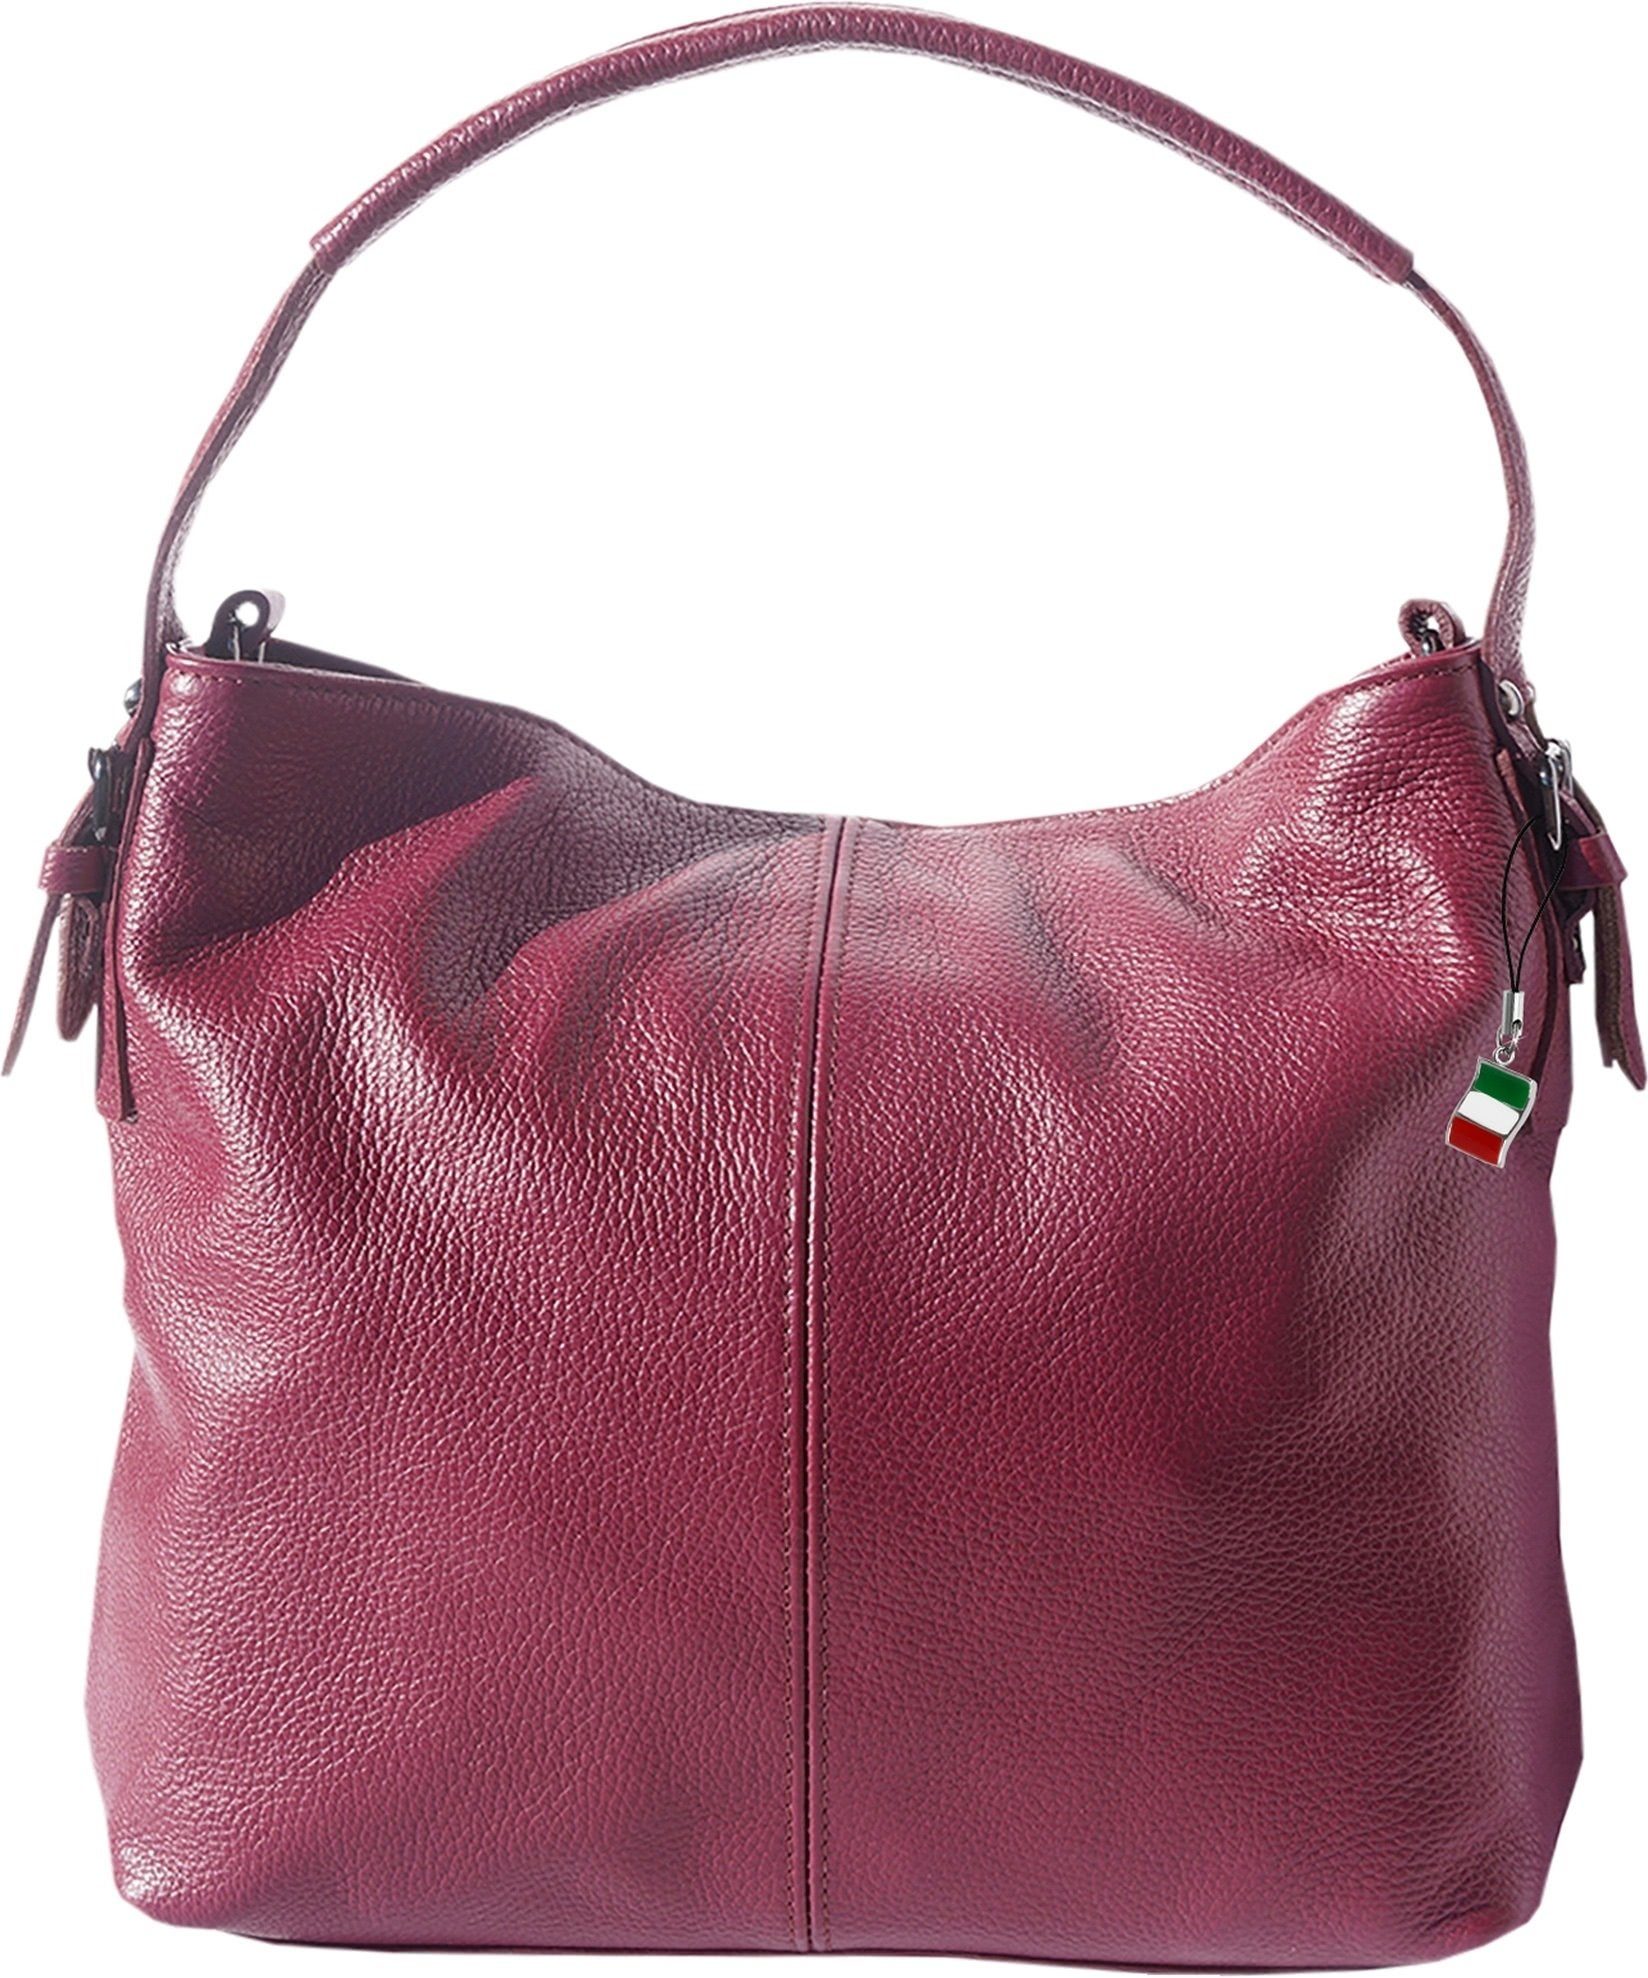 FLORENCE Shopper Florence Damentasche Leder Hobo Bag rot, Damen Tasche aus  Echtleder in rot, bordeaux, ca. 34cm Breite, Made-In Italy